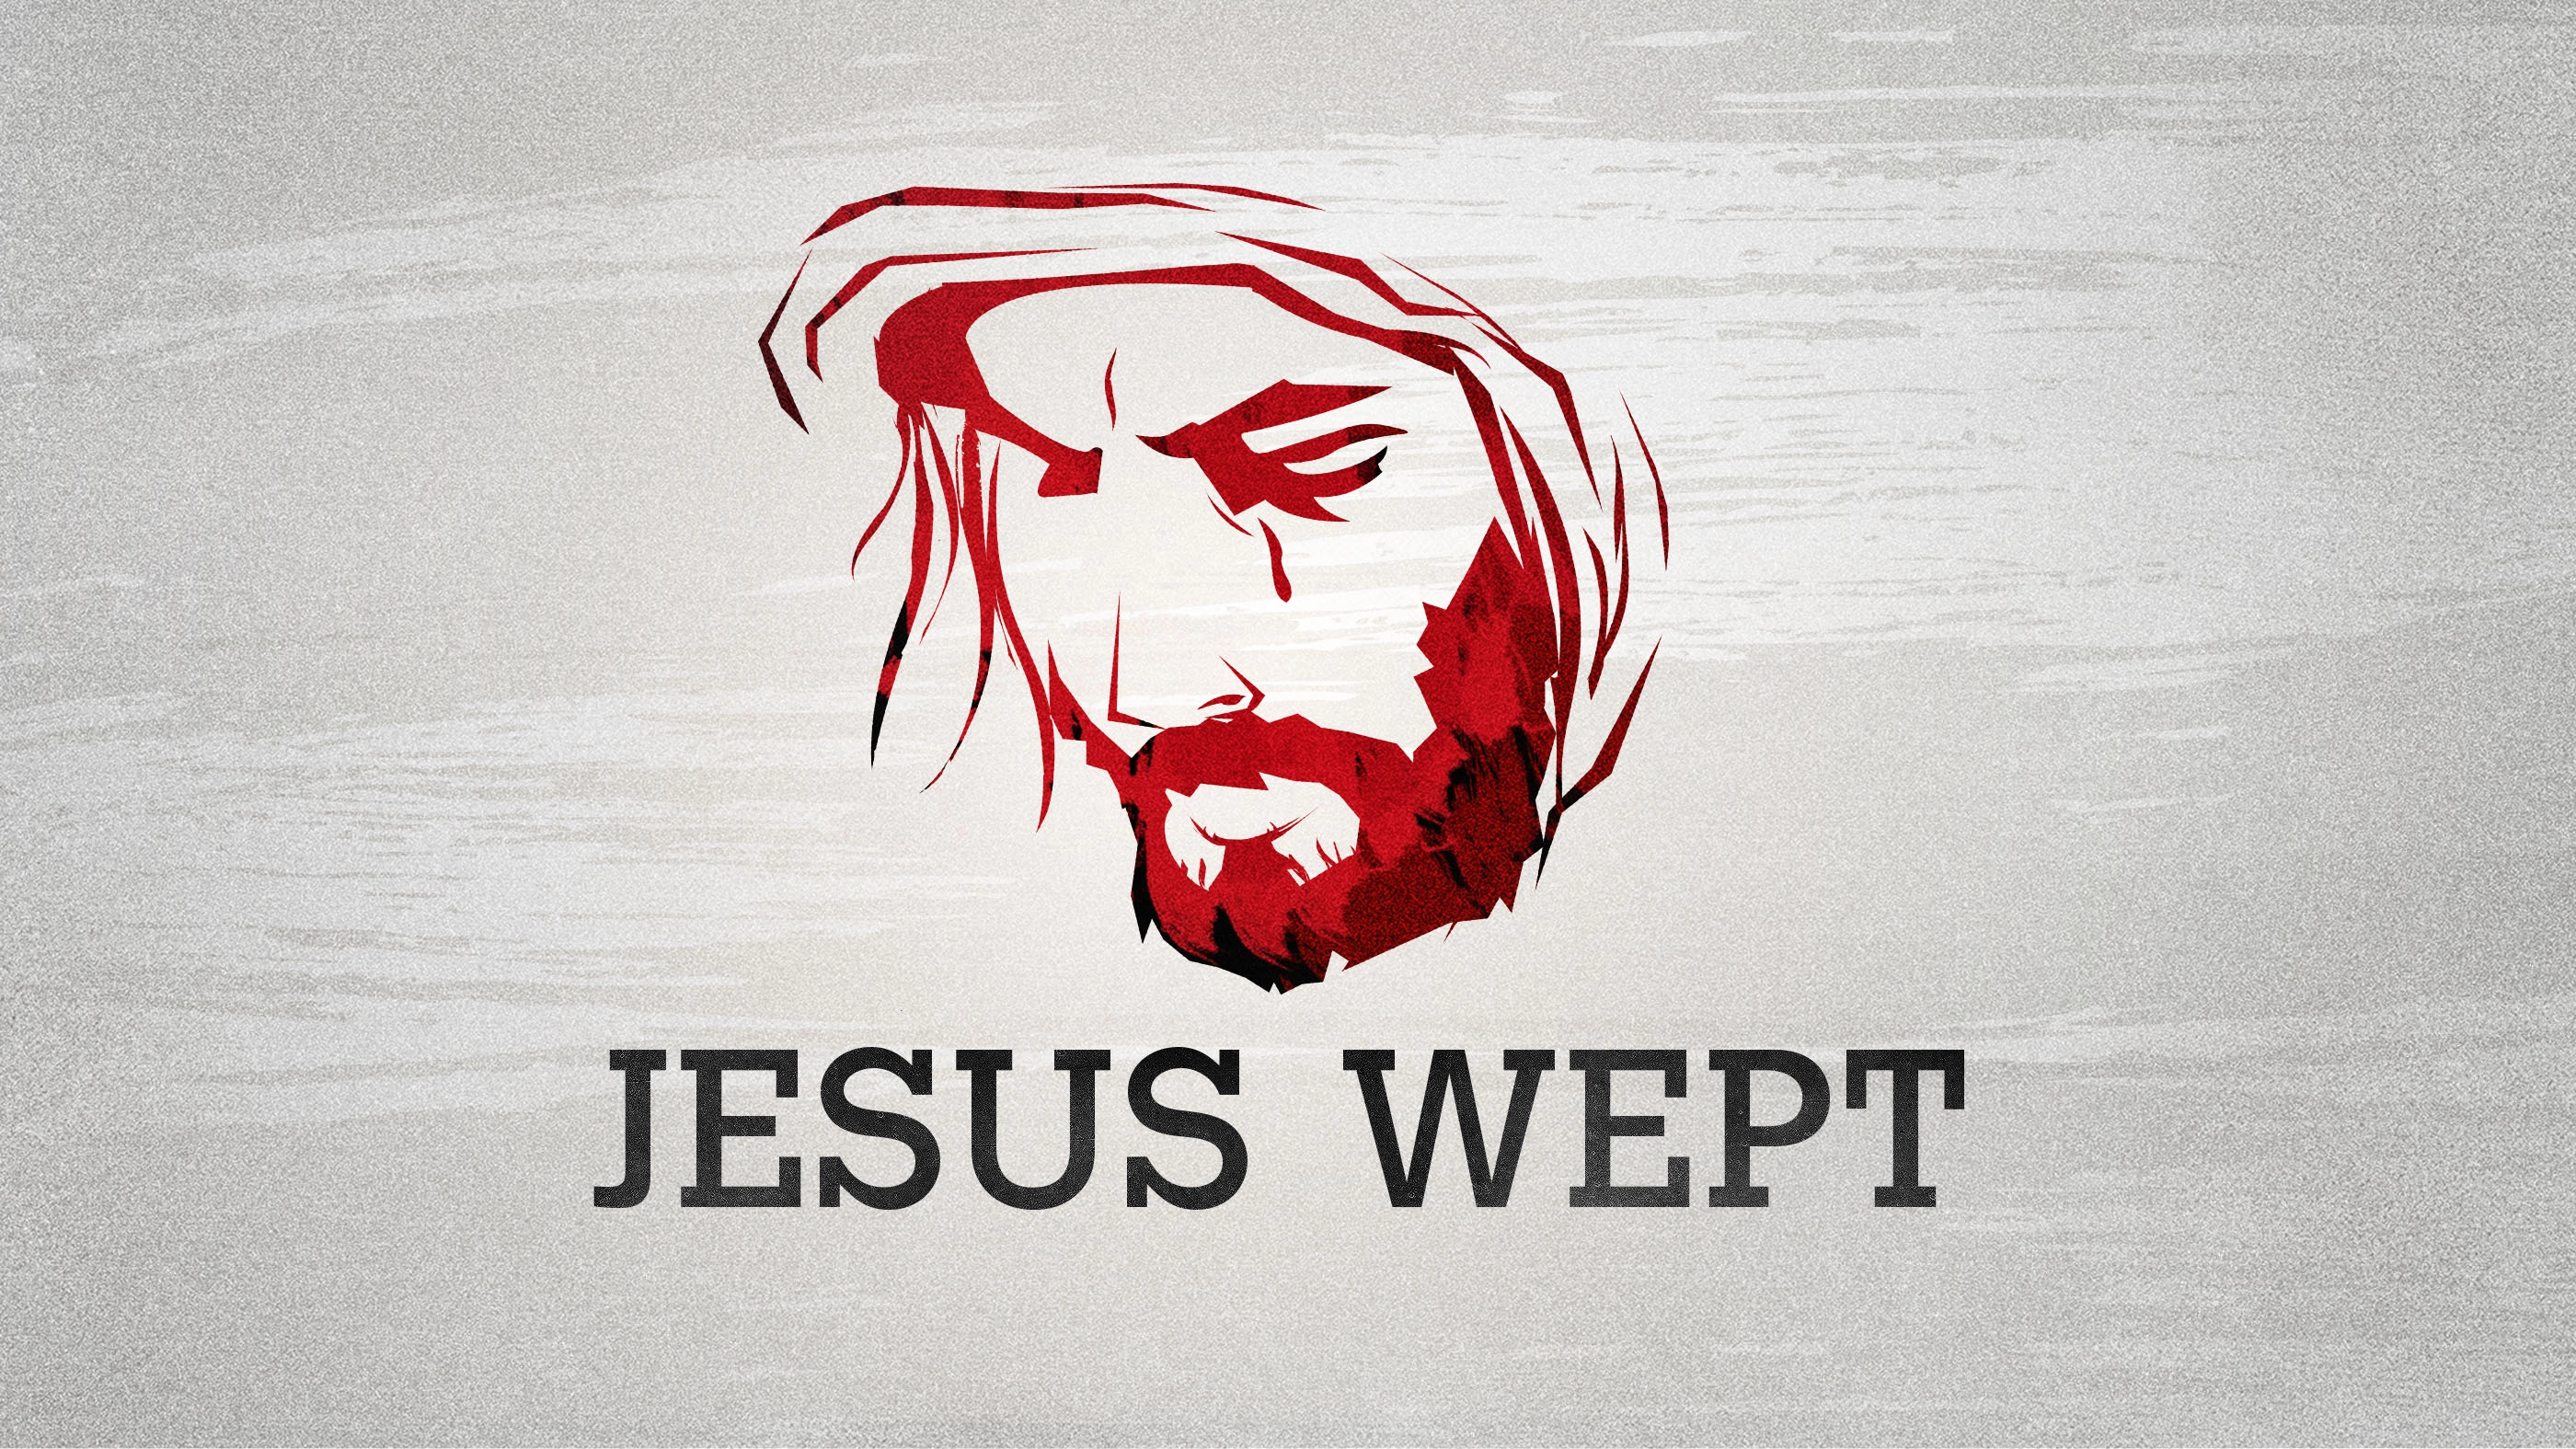 “Jesus wept: and no wonder by Christ!”